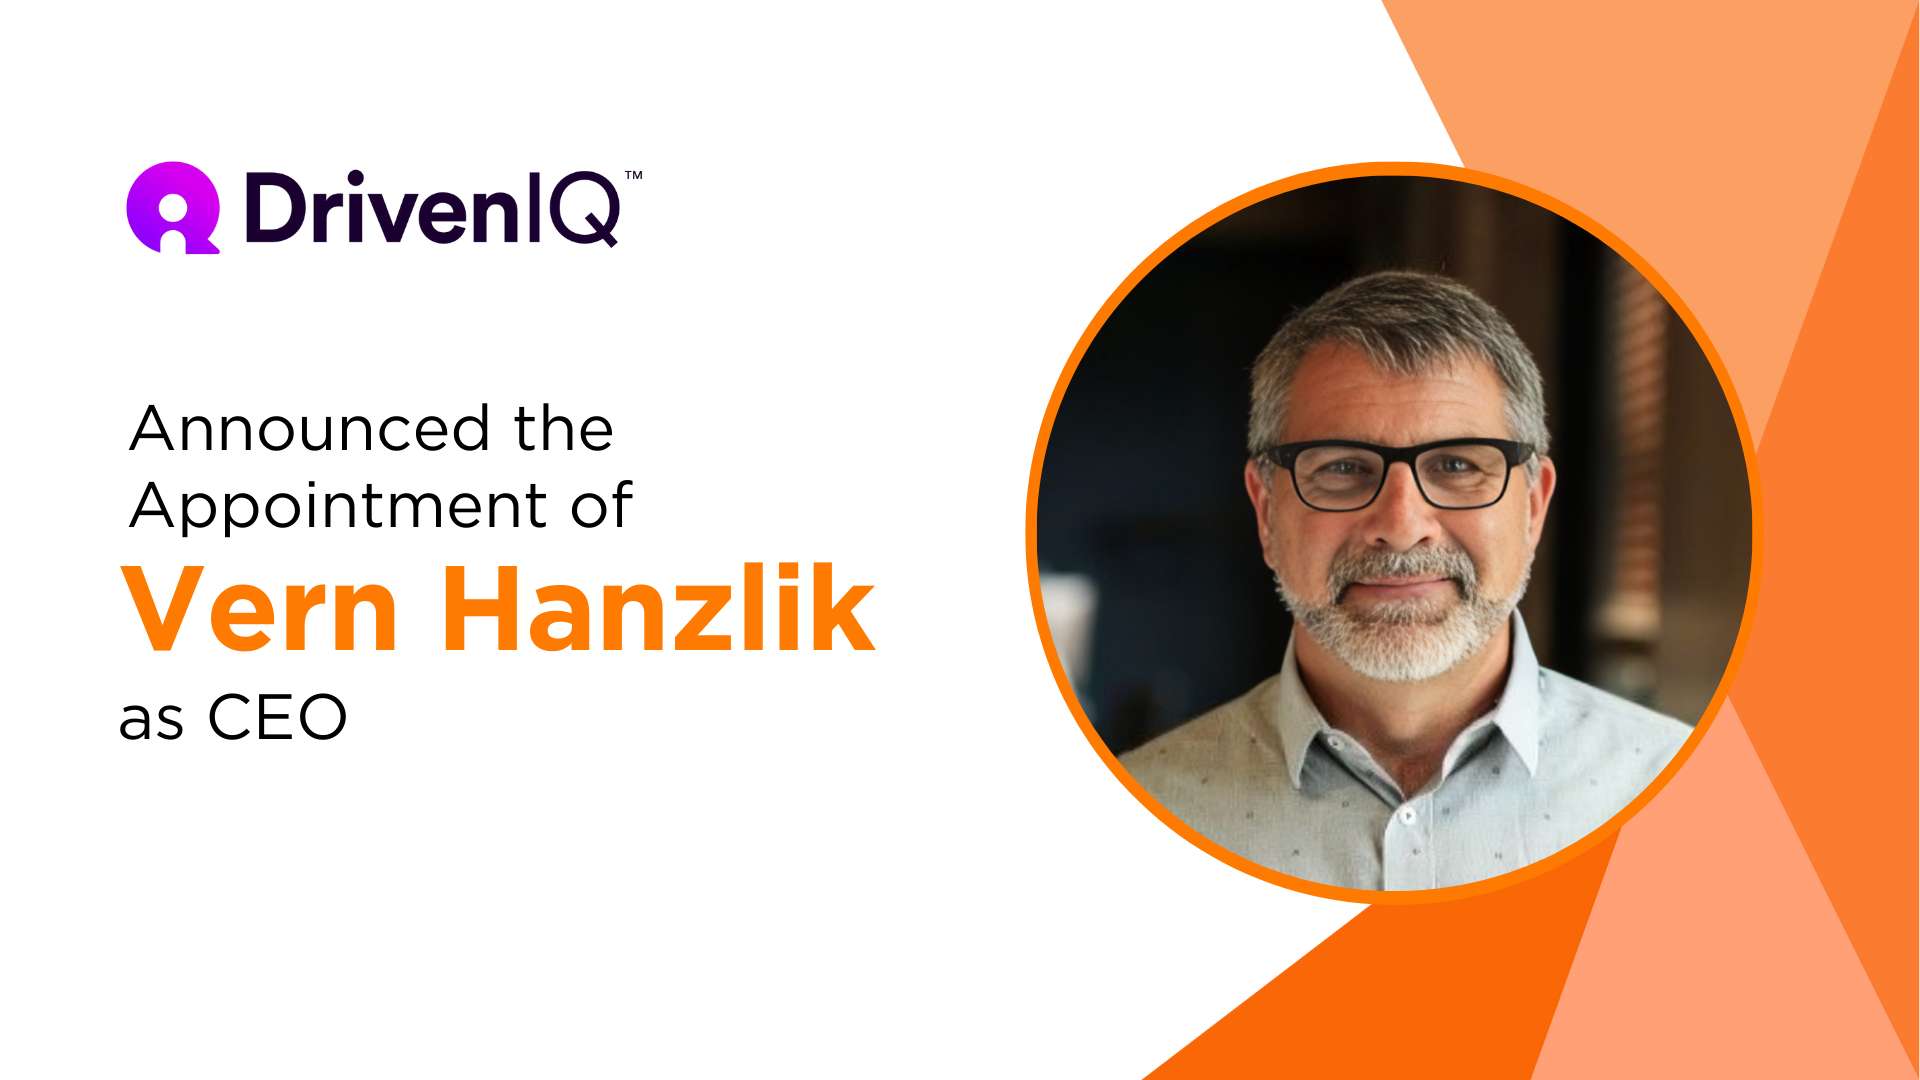 Introducing Vern Hanzlik as CEO of DrivenIQ: Revolutionizing Data-Driven Marketing